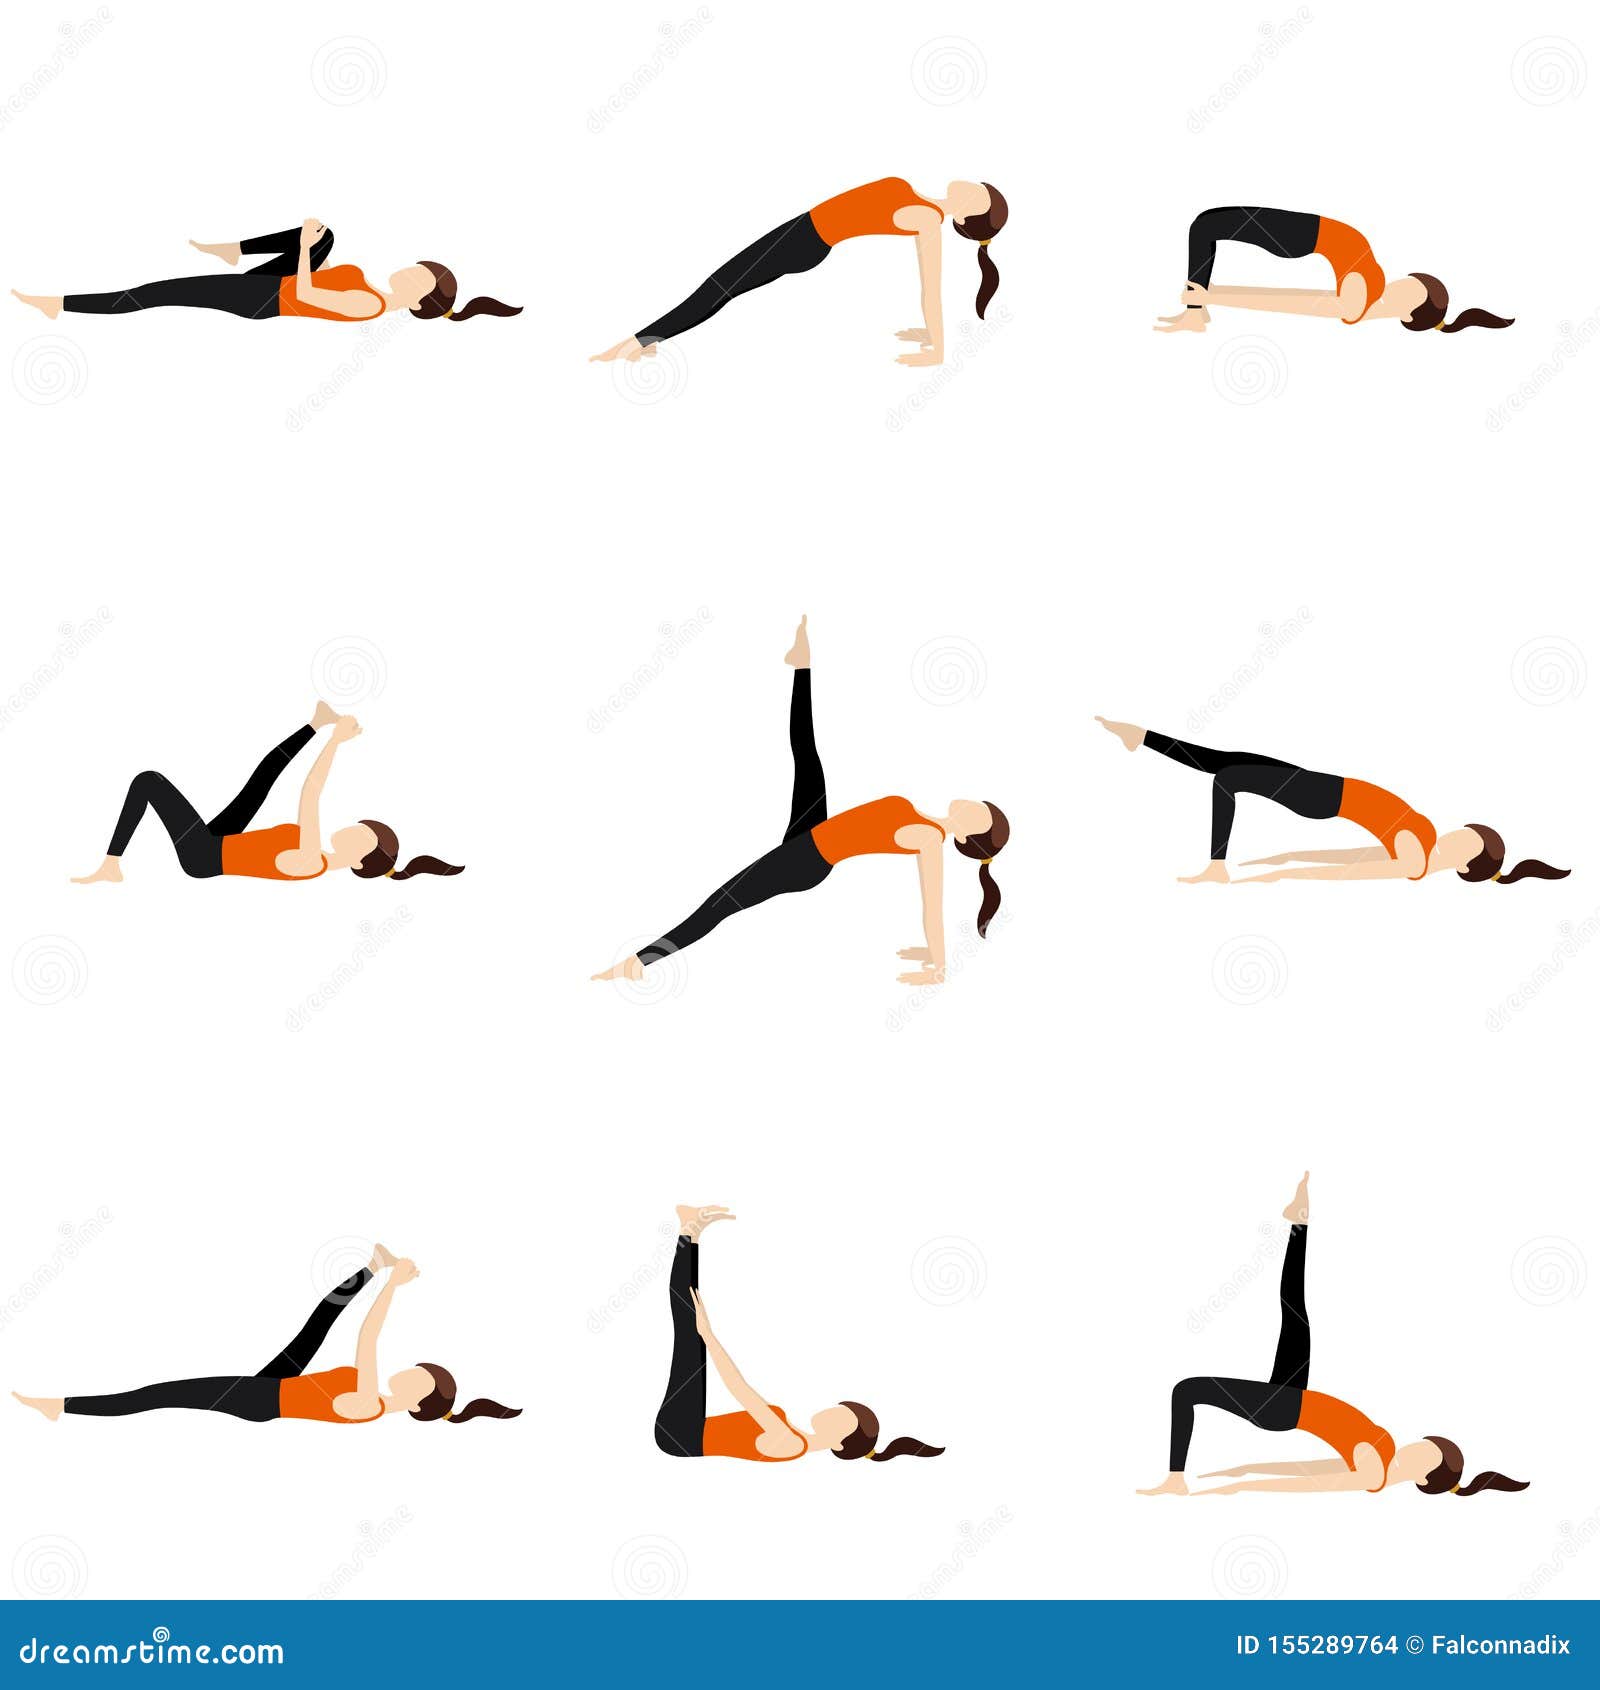 5 Yoga Poses to Increase Circulation